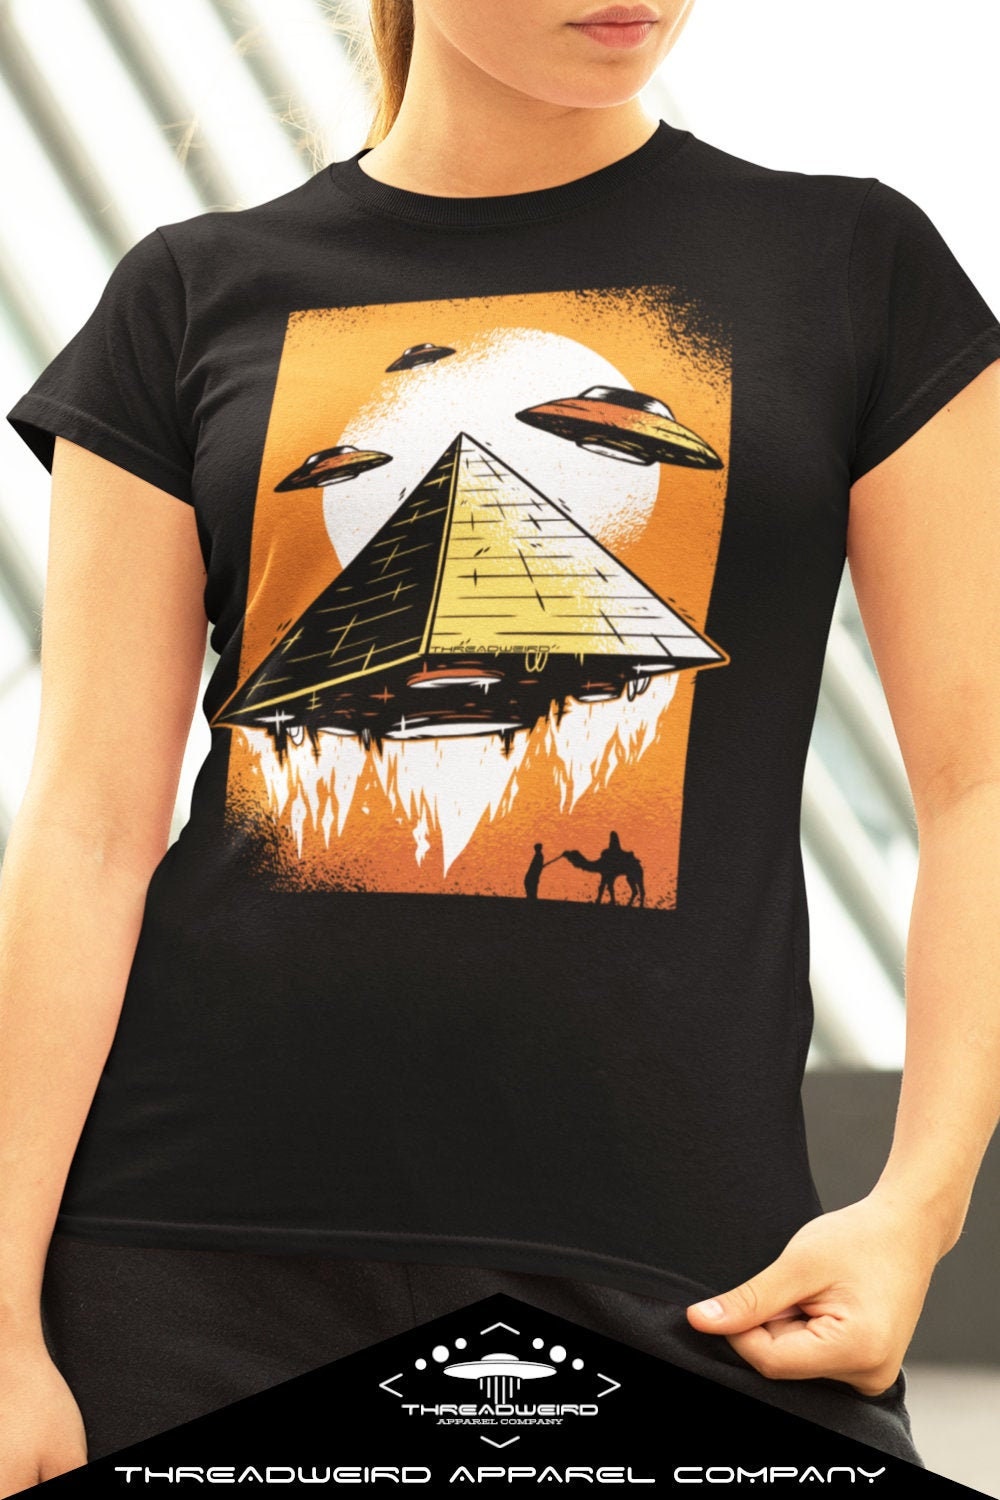 angustia Virgen Odiseo Black Pyramid Clothing - Etsy